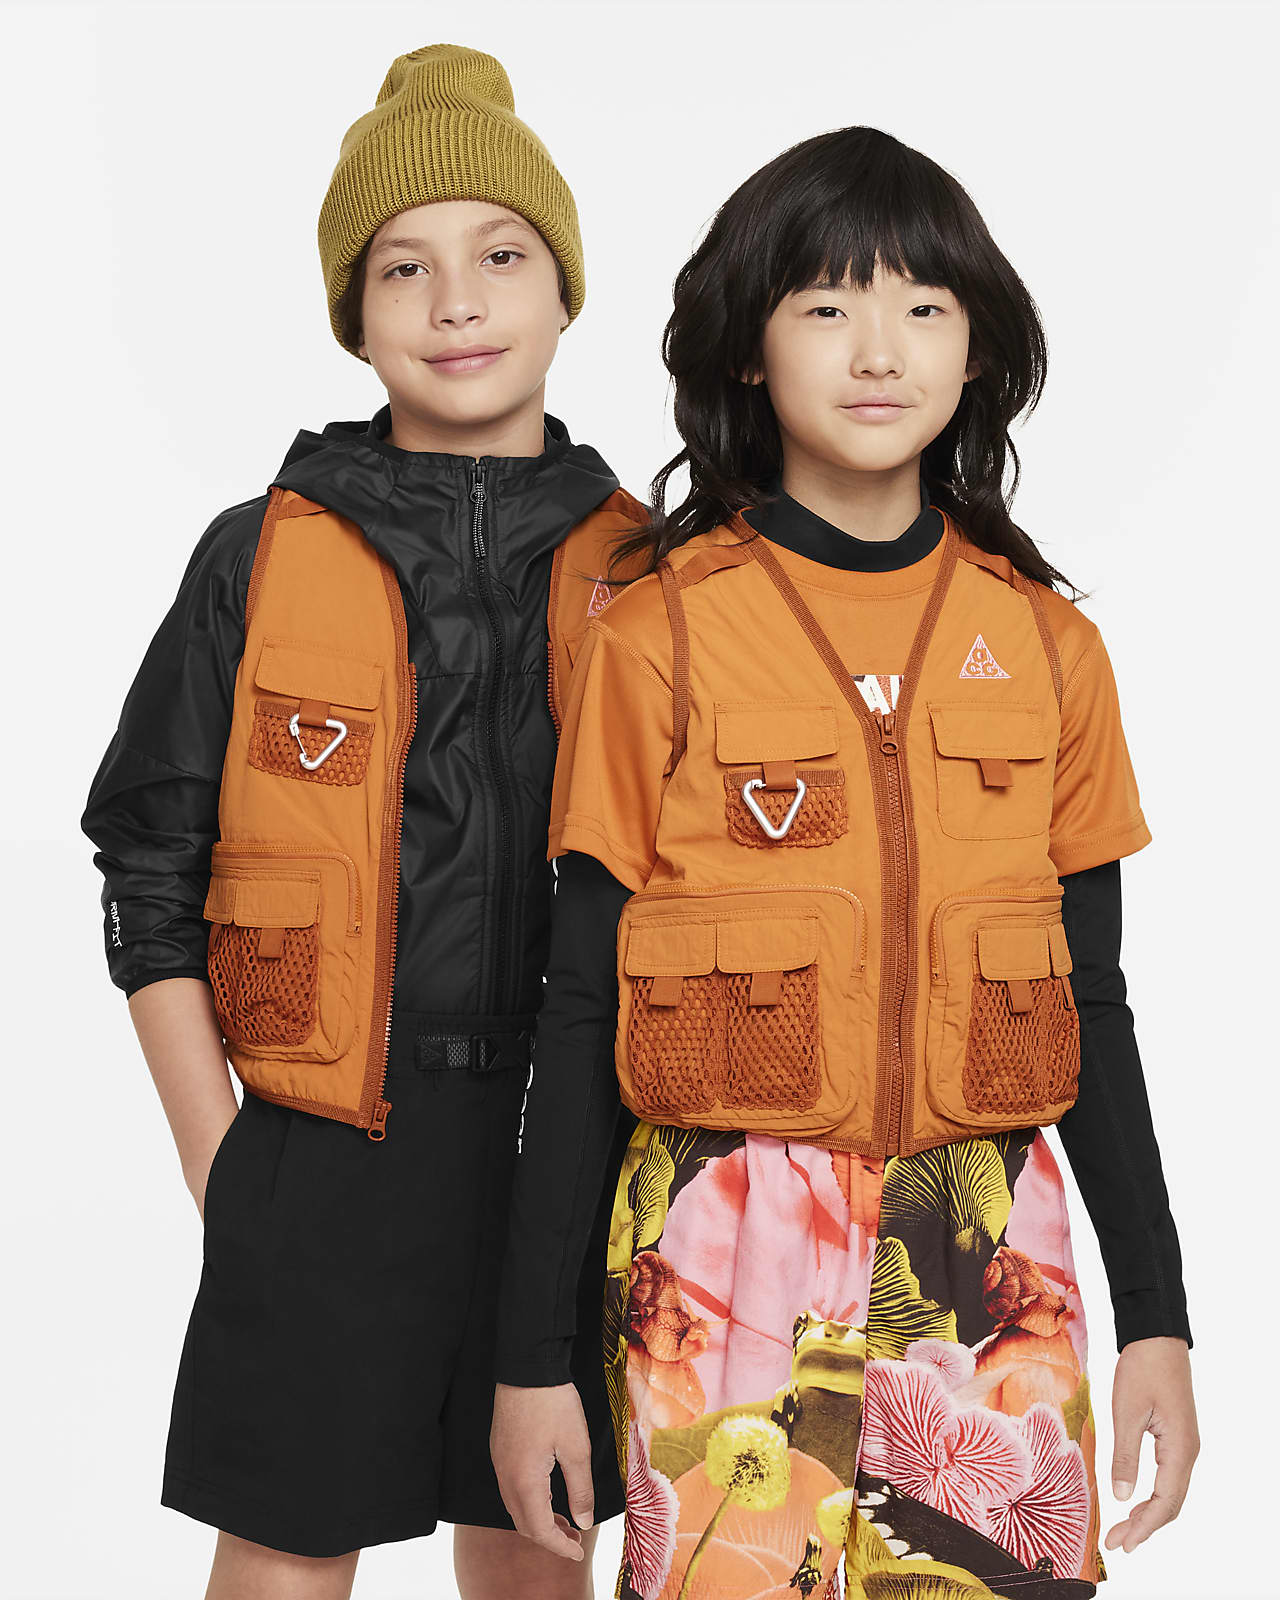 Nike ACG Storm-FIT Big Kids' Convertible Jacket.